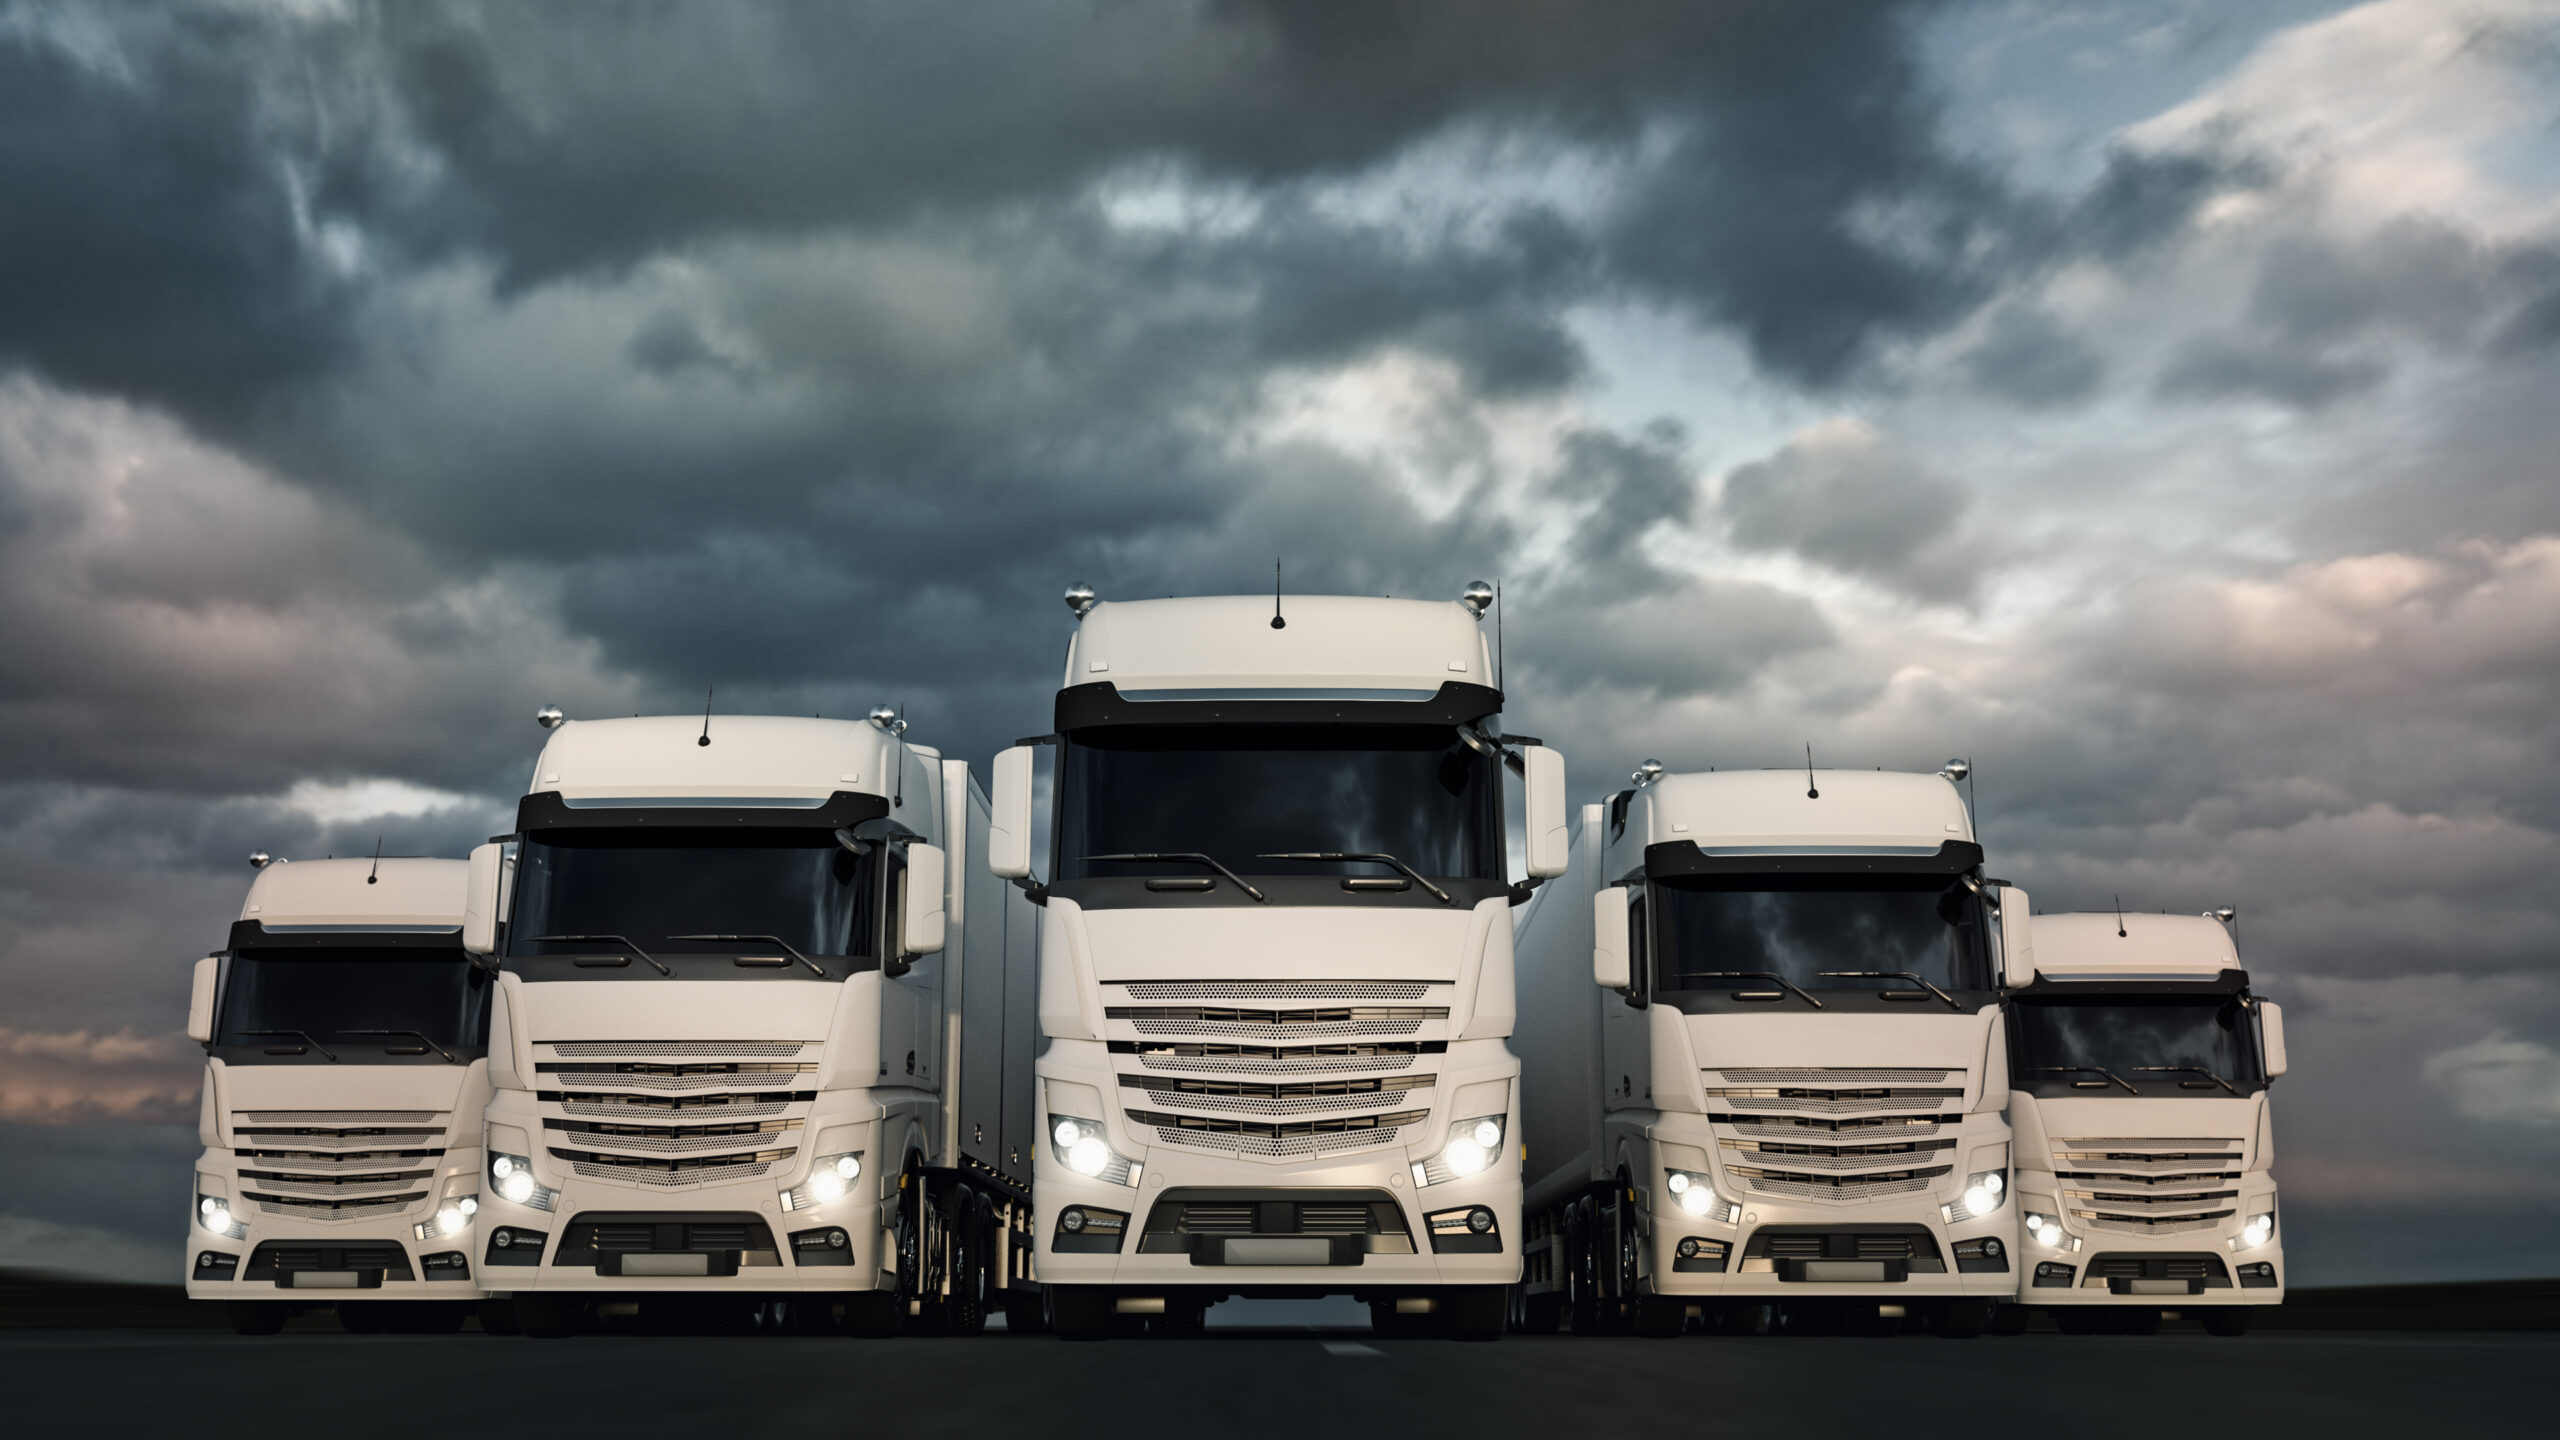 Modular telematics and fleet management platform for smarter cars and trucks